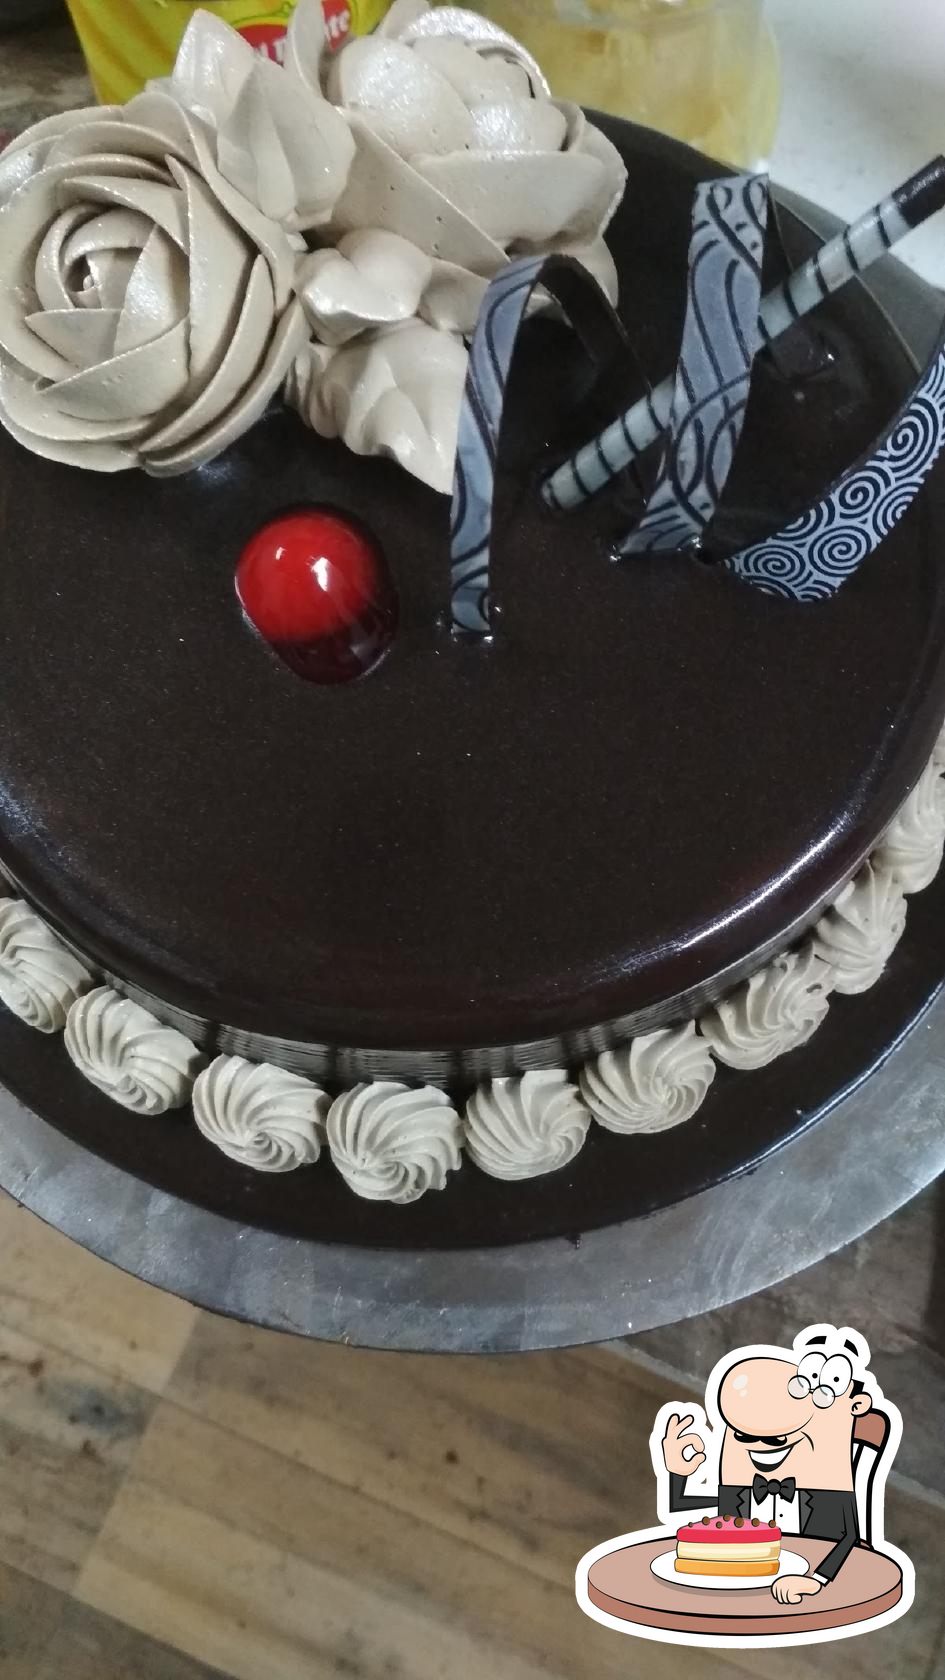 CAKE HOUSE - Cake shop - Bhagalpur - Bihar | Yappe.in